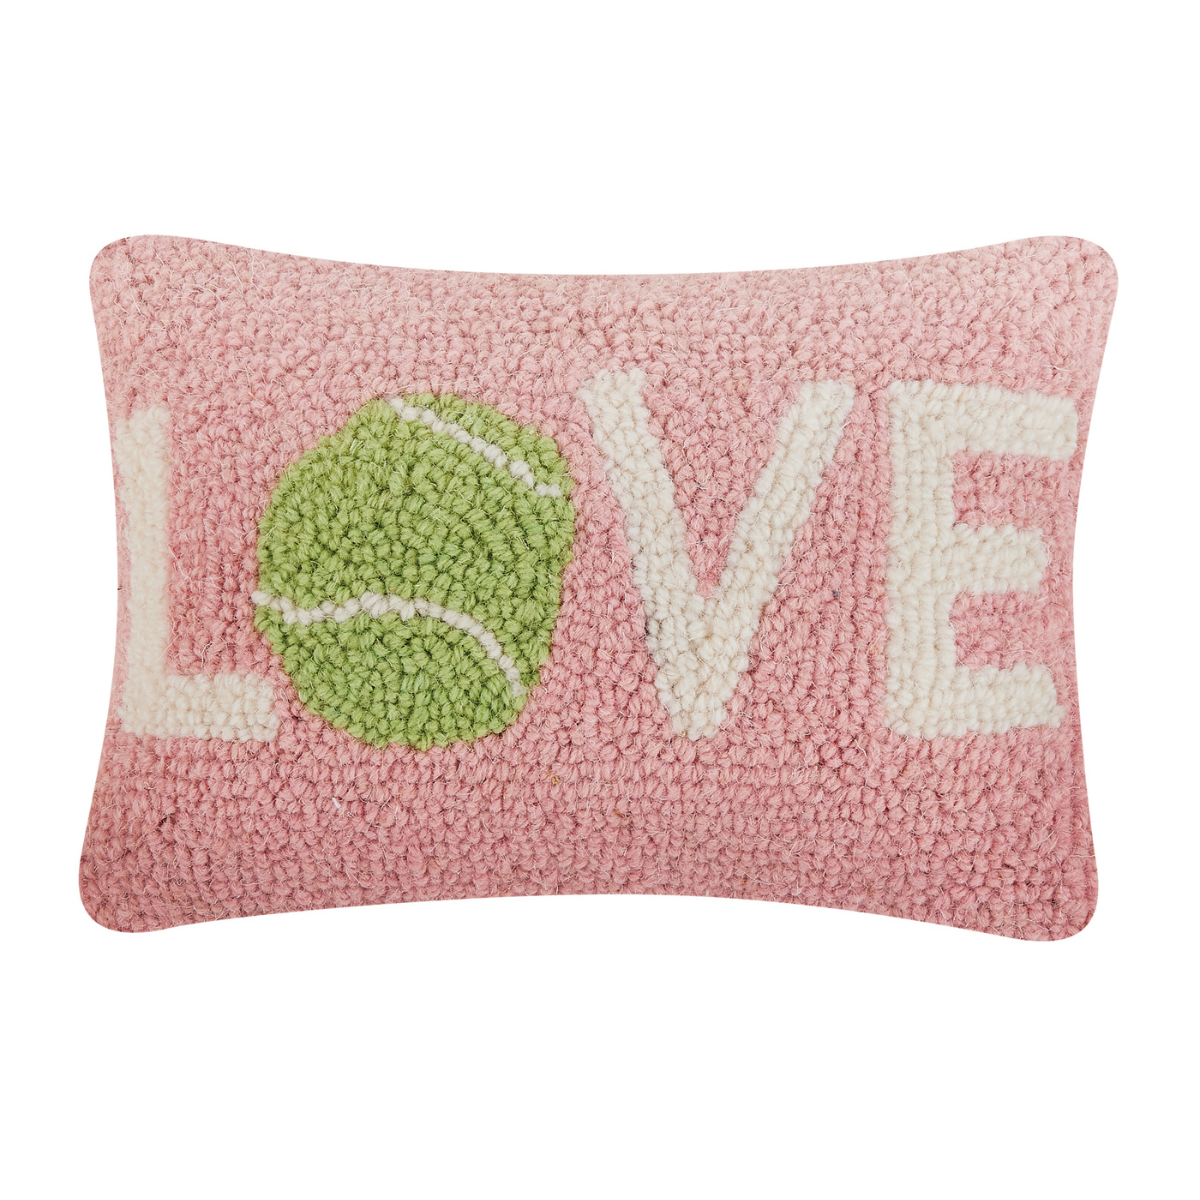 Tennis Love Hooked Wool Throw Pillow